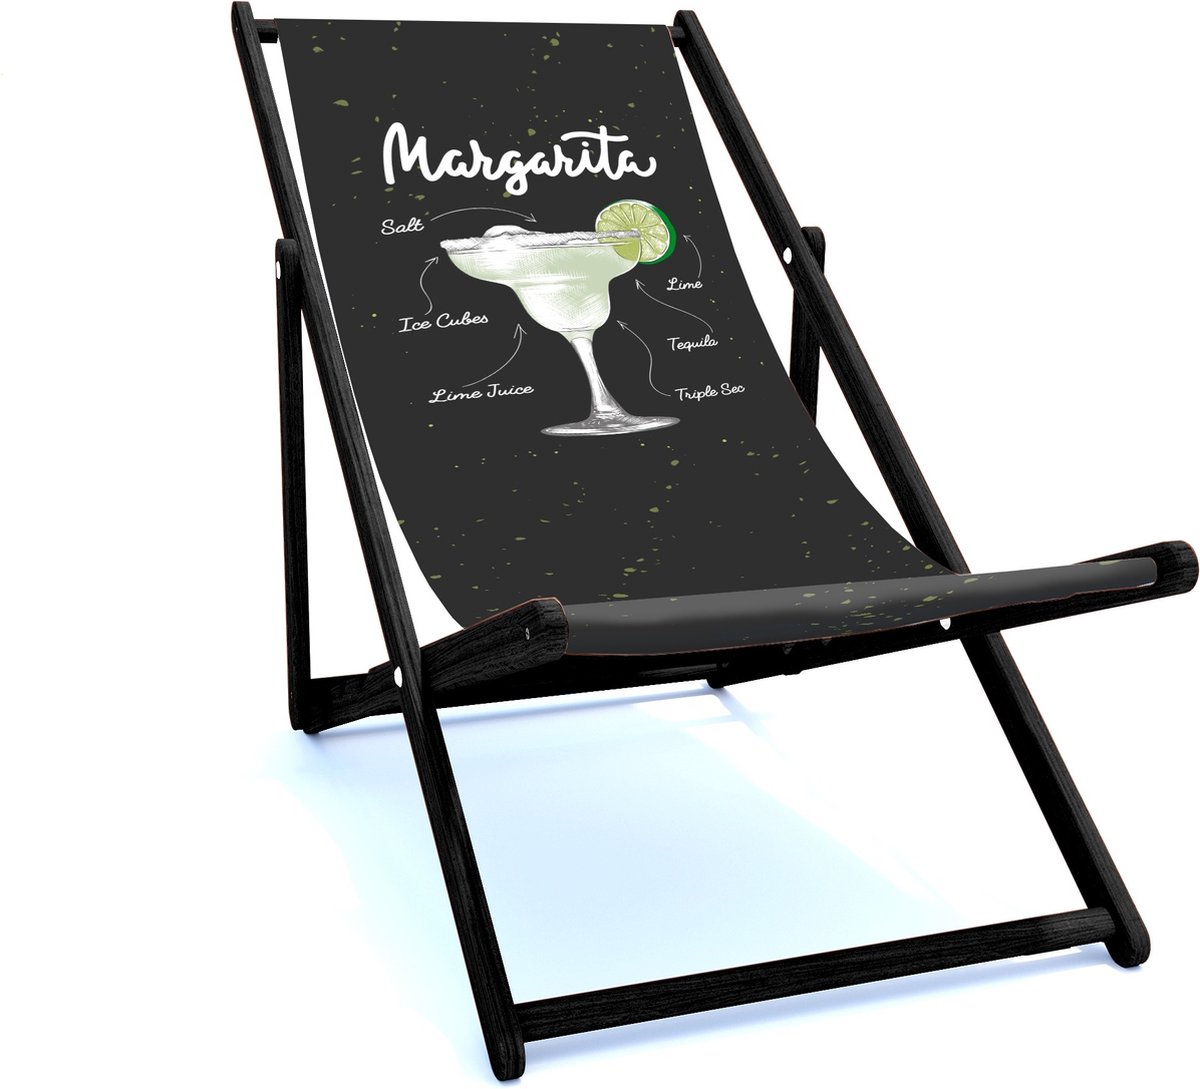 Holtaz Strandstoel Hout Inklapbaar met zwart Frame Comfortabele zonnebed ligbed met verstelbare lighoogte houten frame met stoffen Motief 39